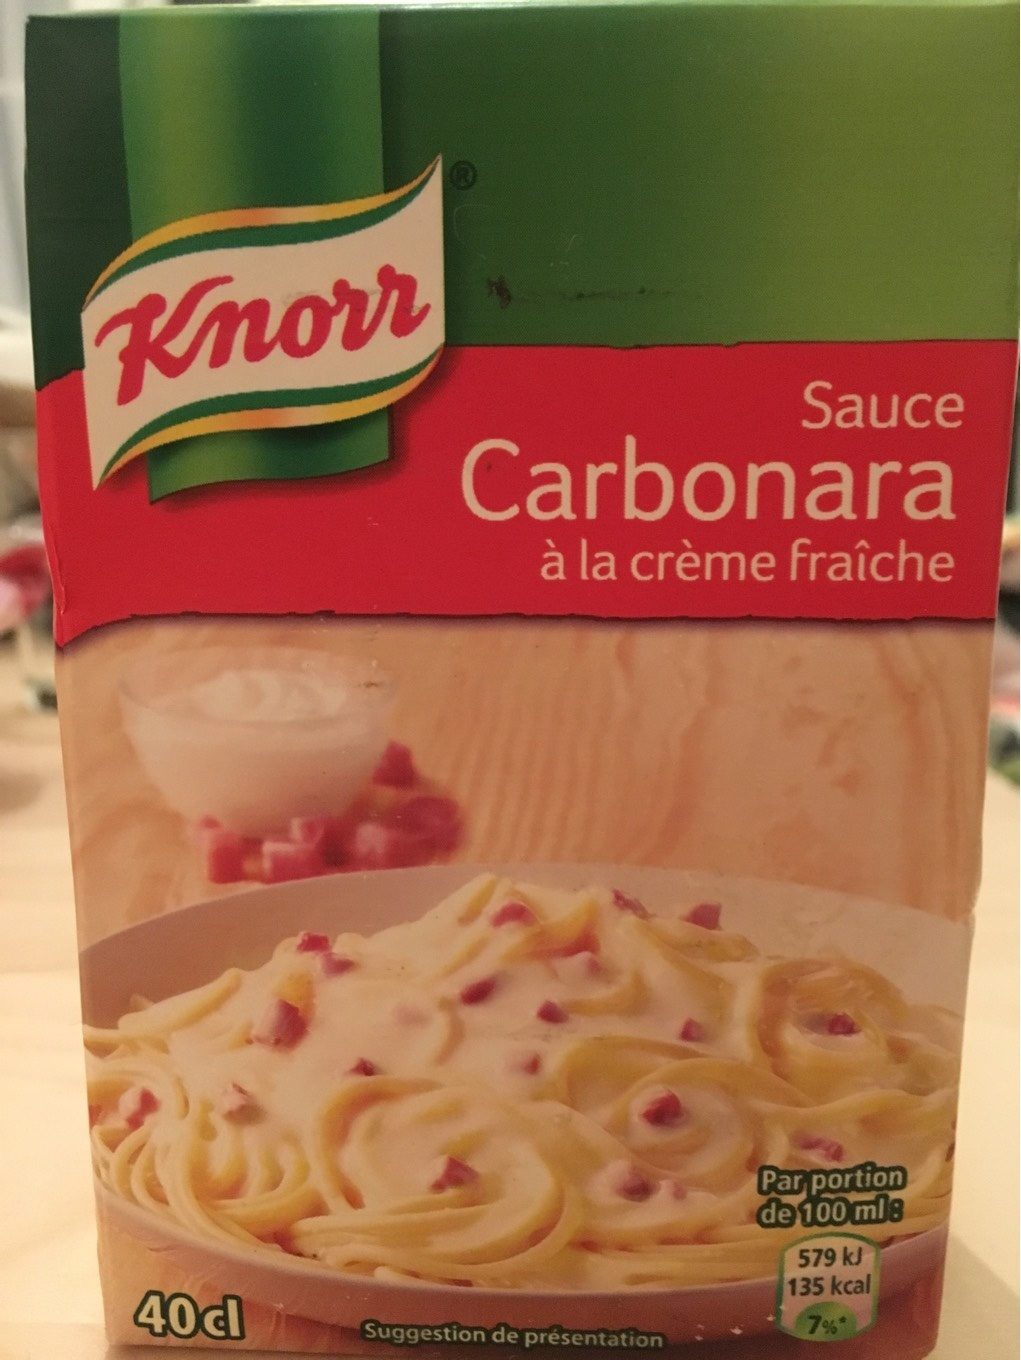 414G Sauce Pate Carbonara Knorr - Product - fr